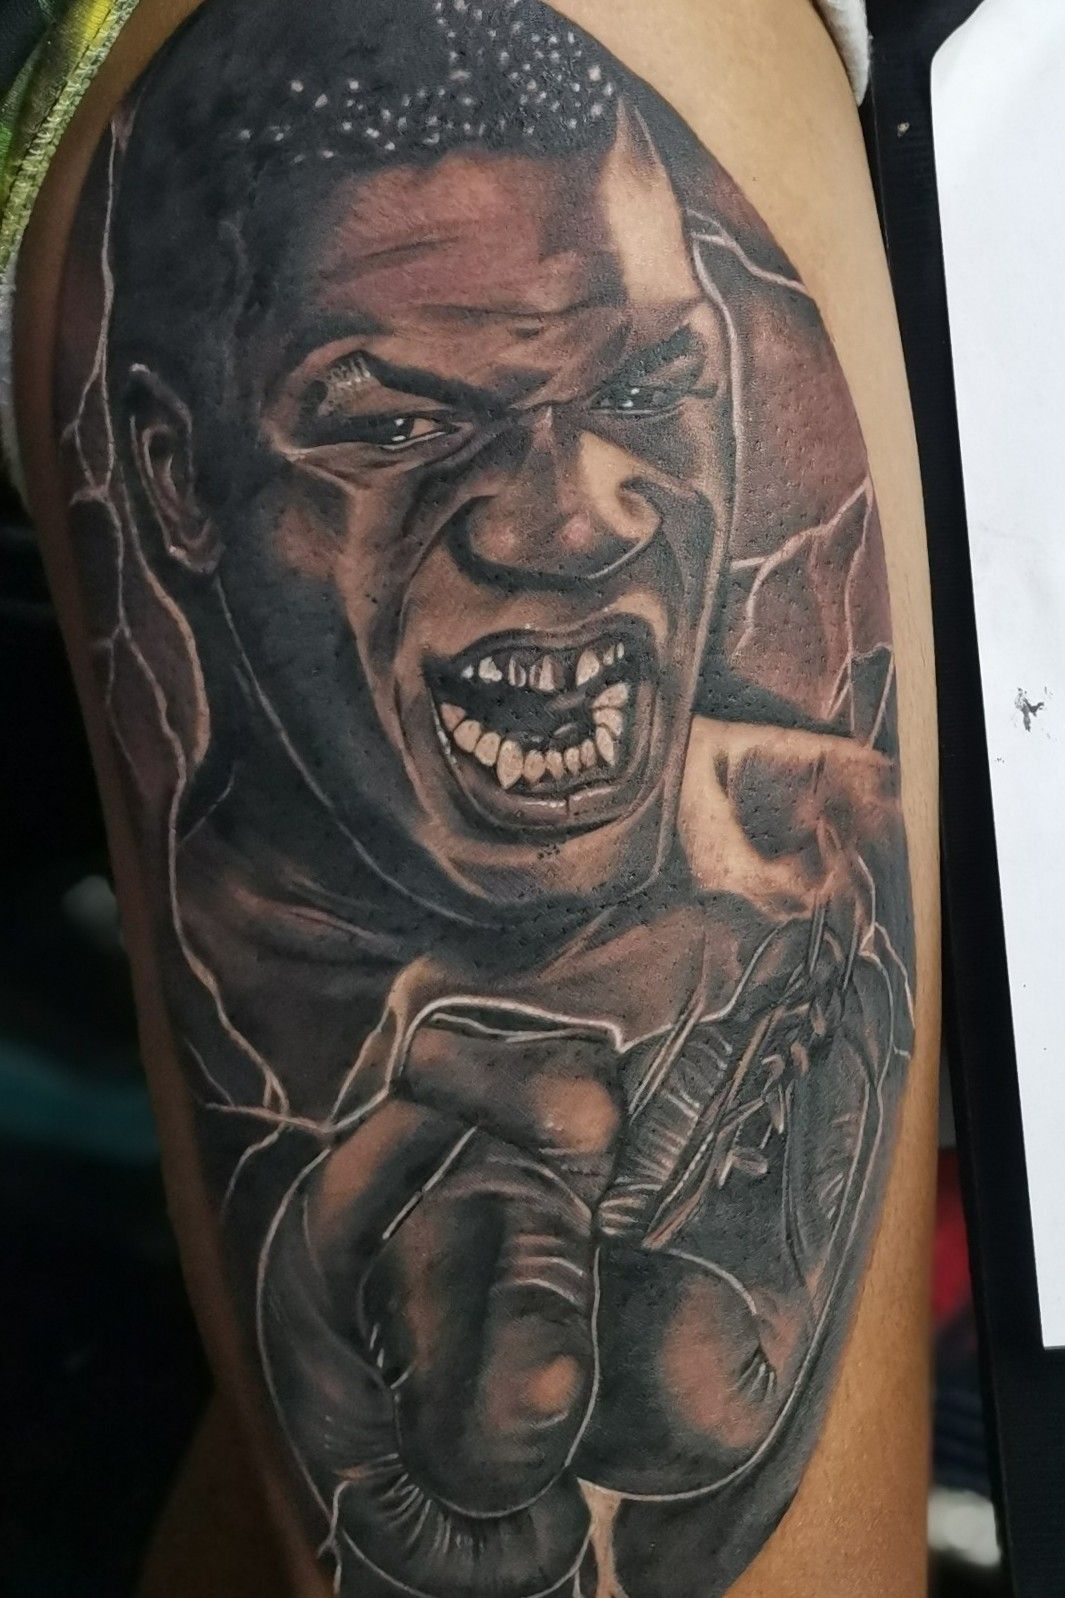 Mike Ness by Bob Tyrrell : Tattoos